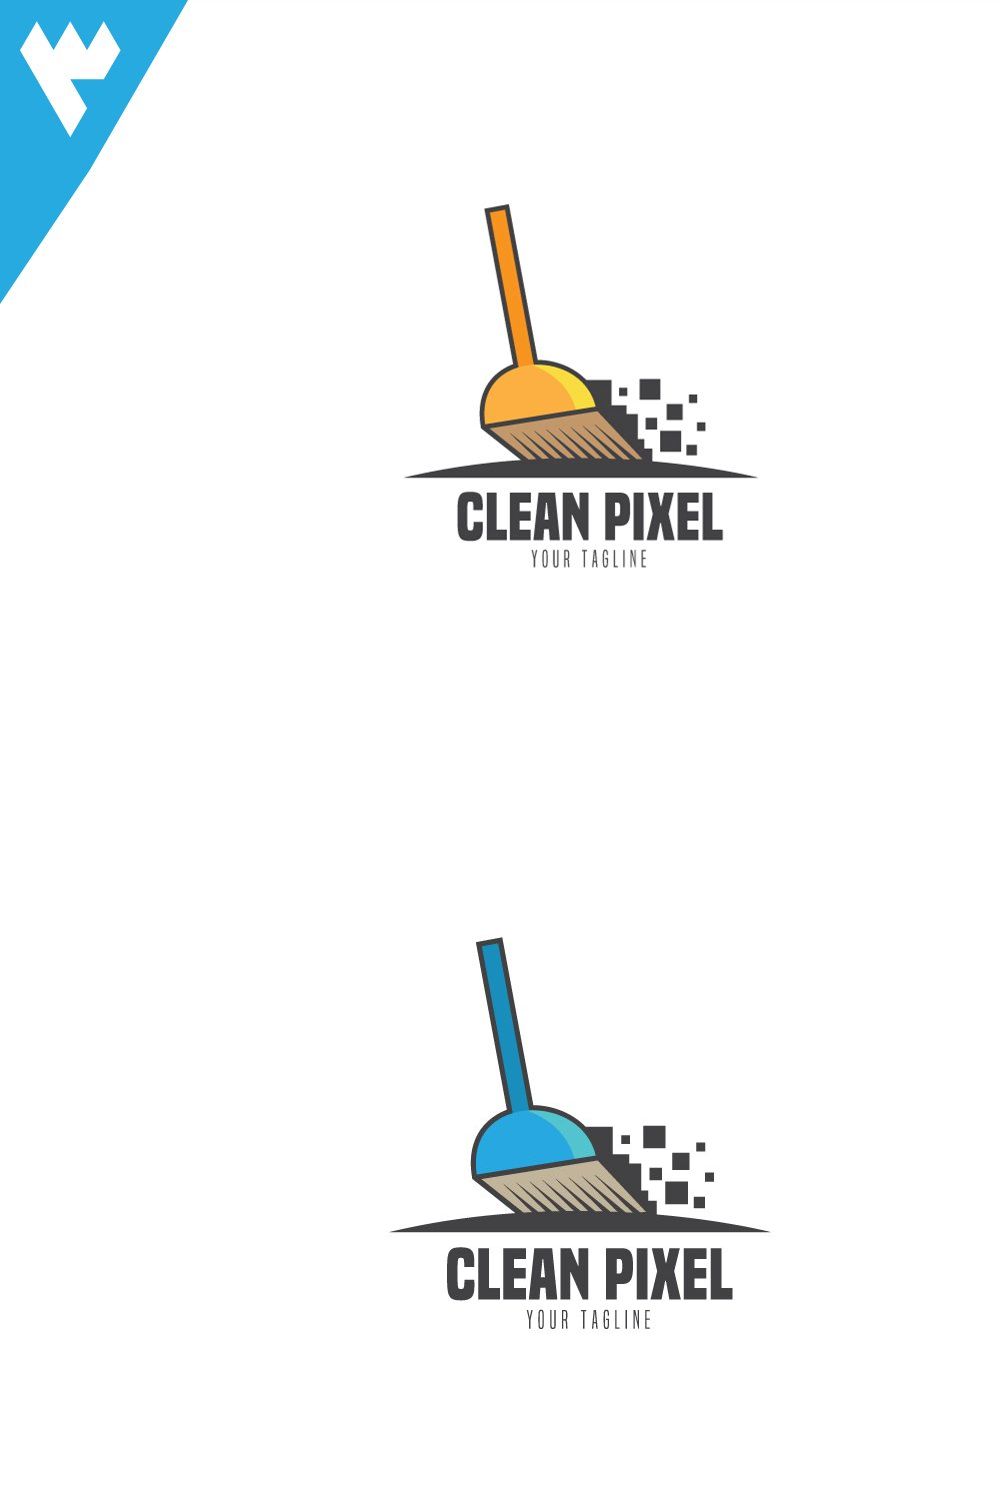 Clean Pixel Logo pinterest preview image.